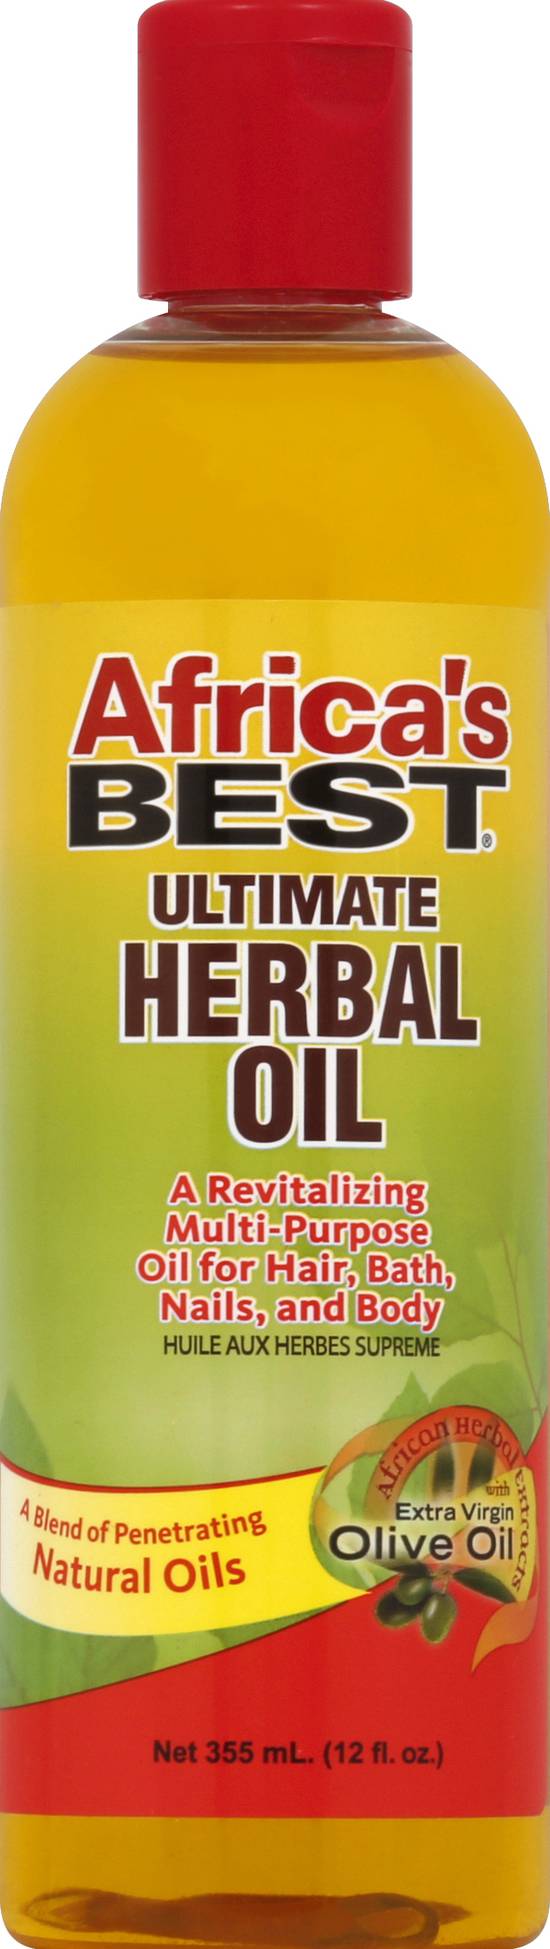 Africa's Best Revitalizing Multi-Purpose Herbal Oil (12 fl oz)